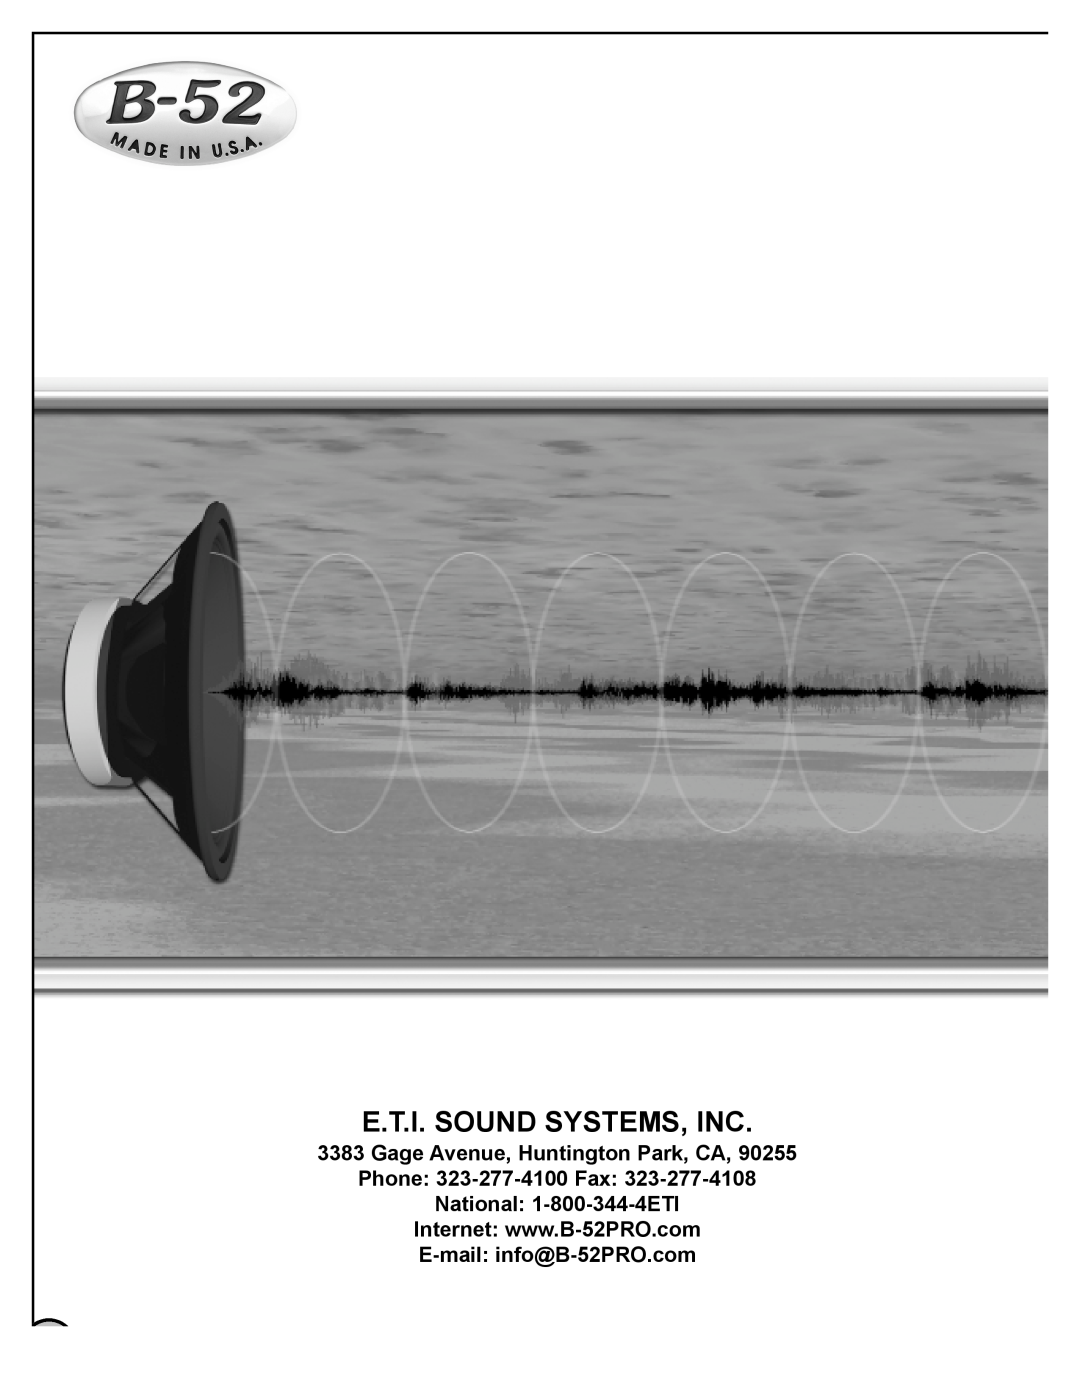 Audio Pro SP-18 manual E.T.I. Sound Systems, Inc, Gage Avenue, Huntington Park, CA 